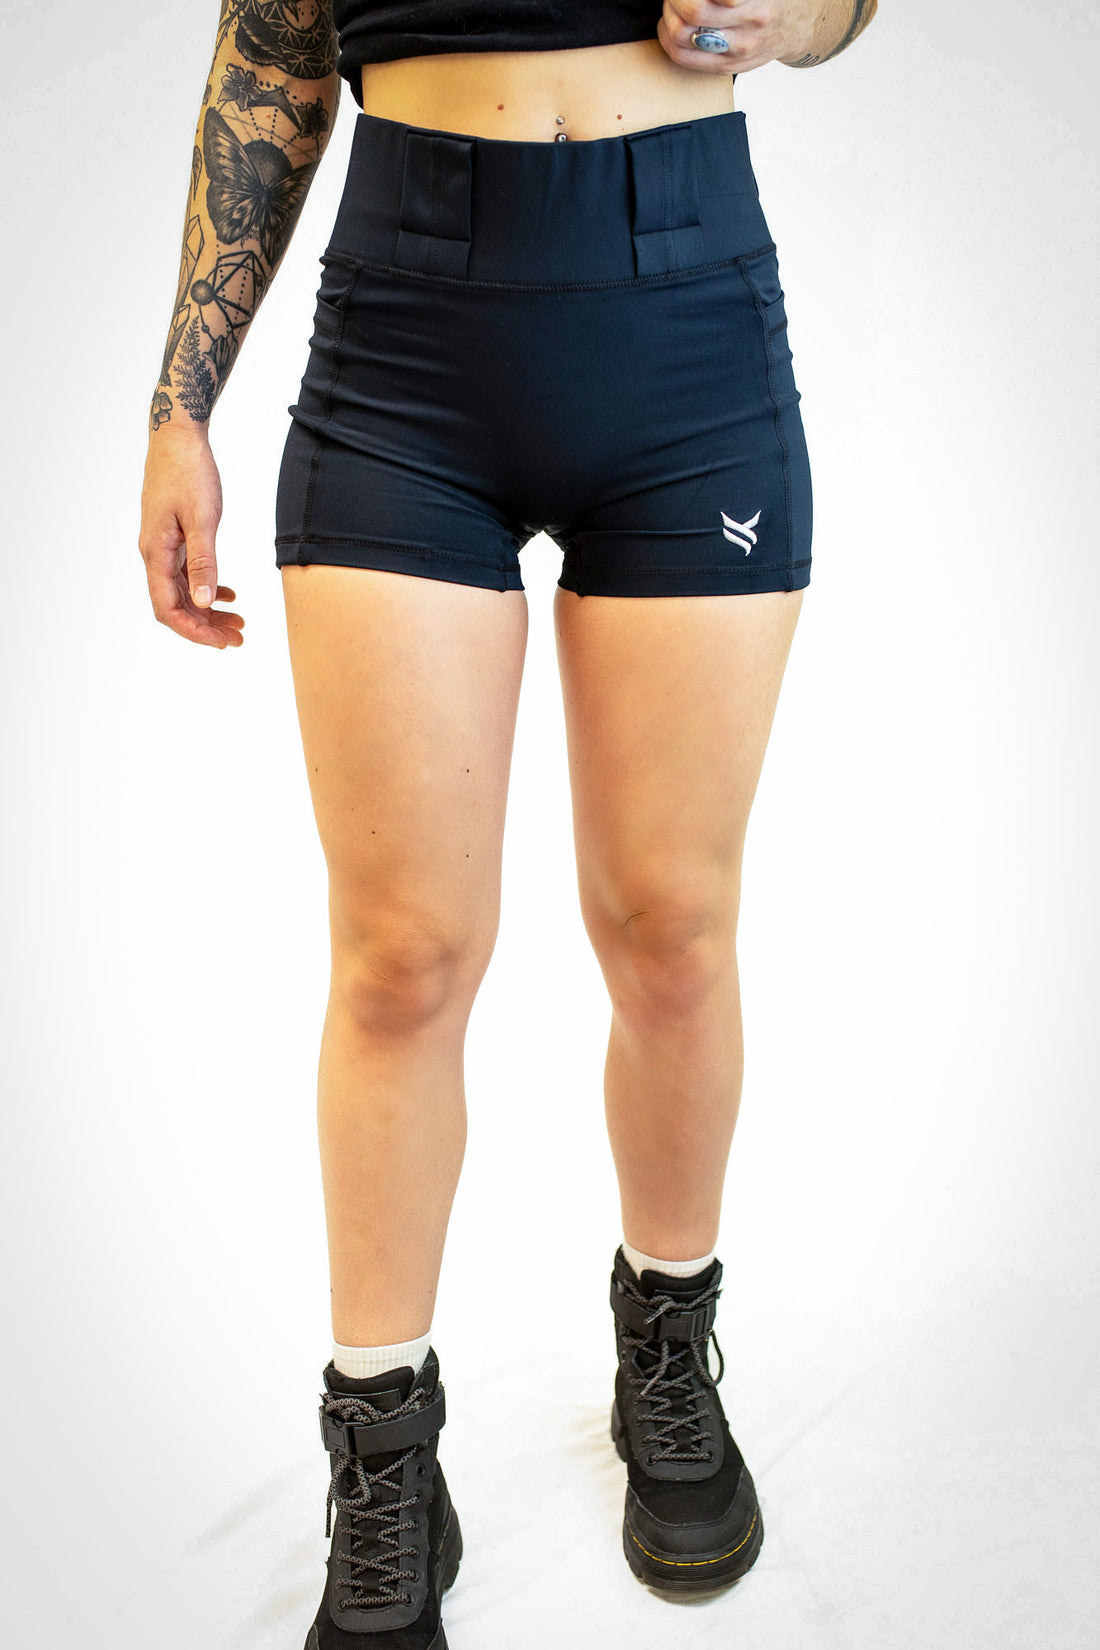 Women's High Rise Curvy Carry Shorts, 3" inseam - Black